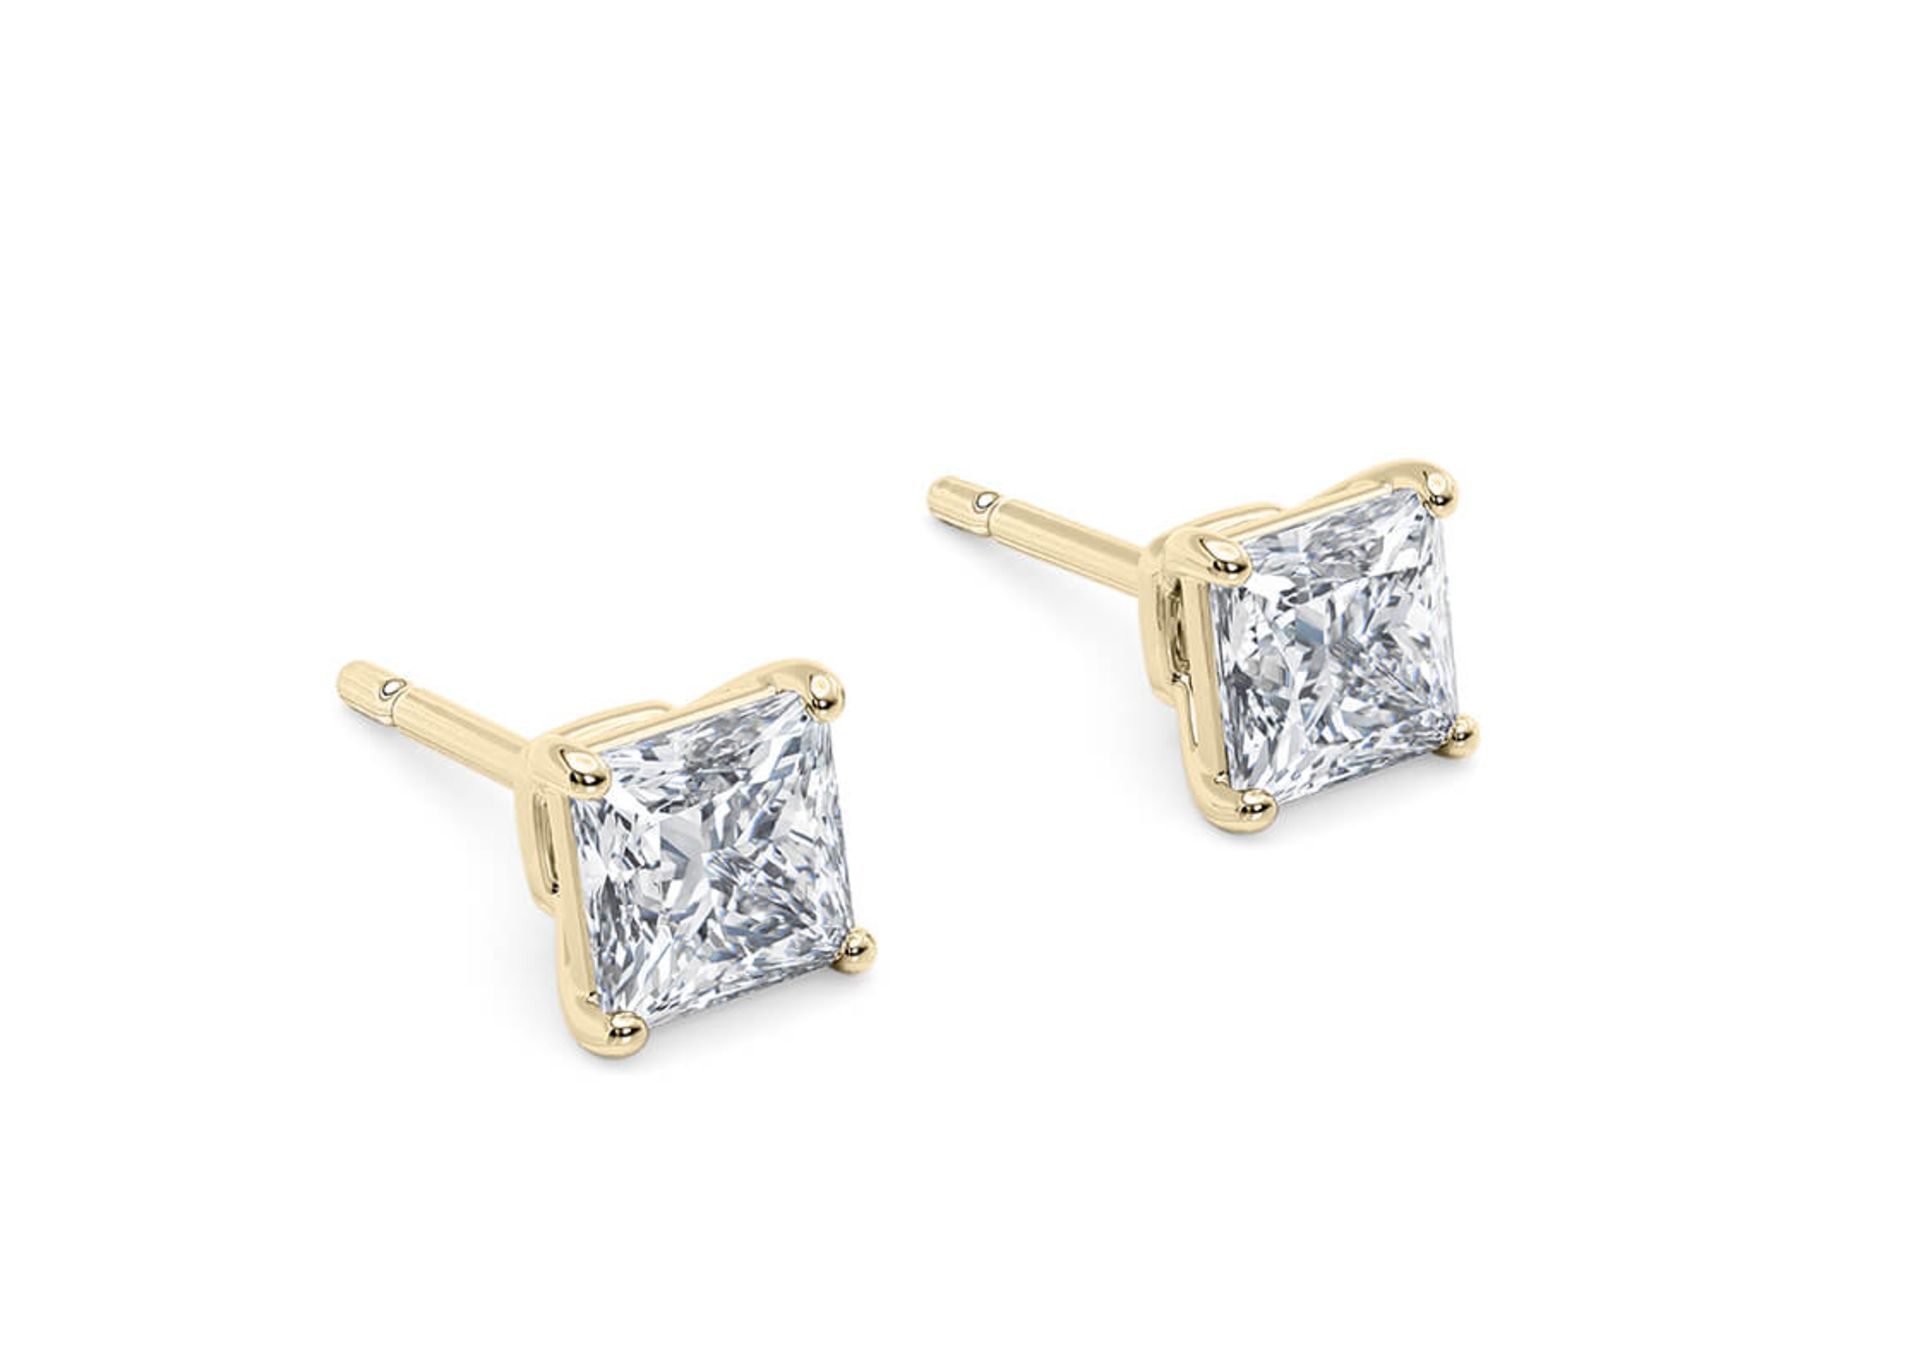 Princess Cut 4.00 Carat Diamond Earrings Set in 18kt Yellow Gold - E Colour VS Clarity - IGI - Image 2 of 3